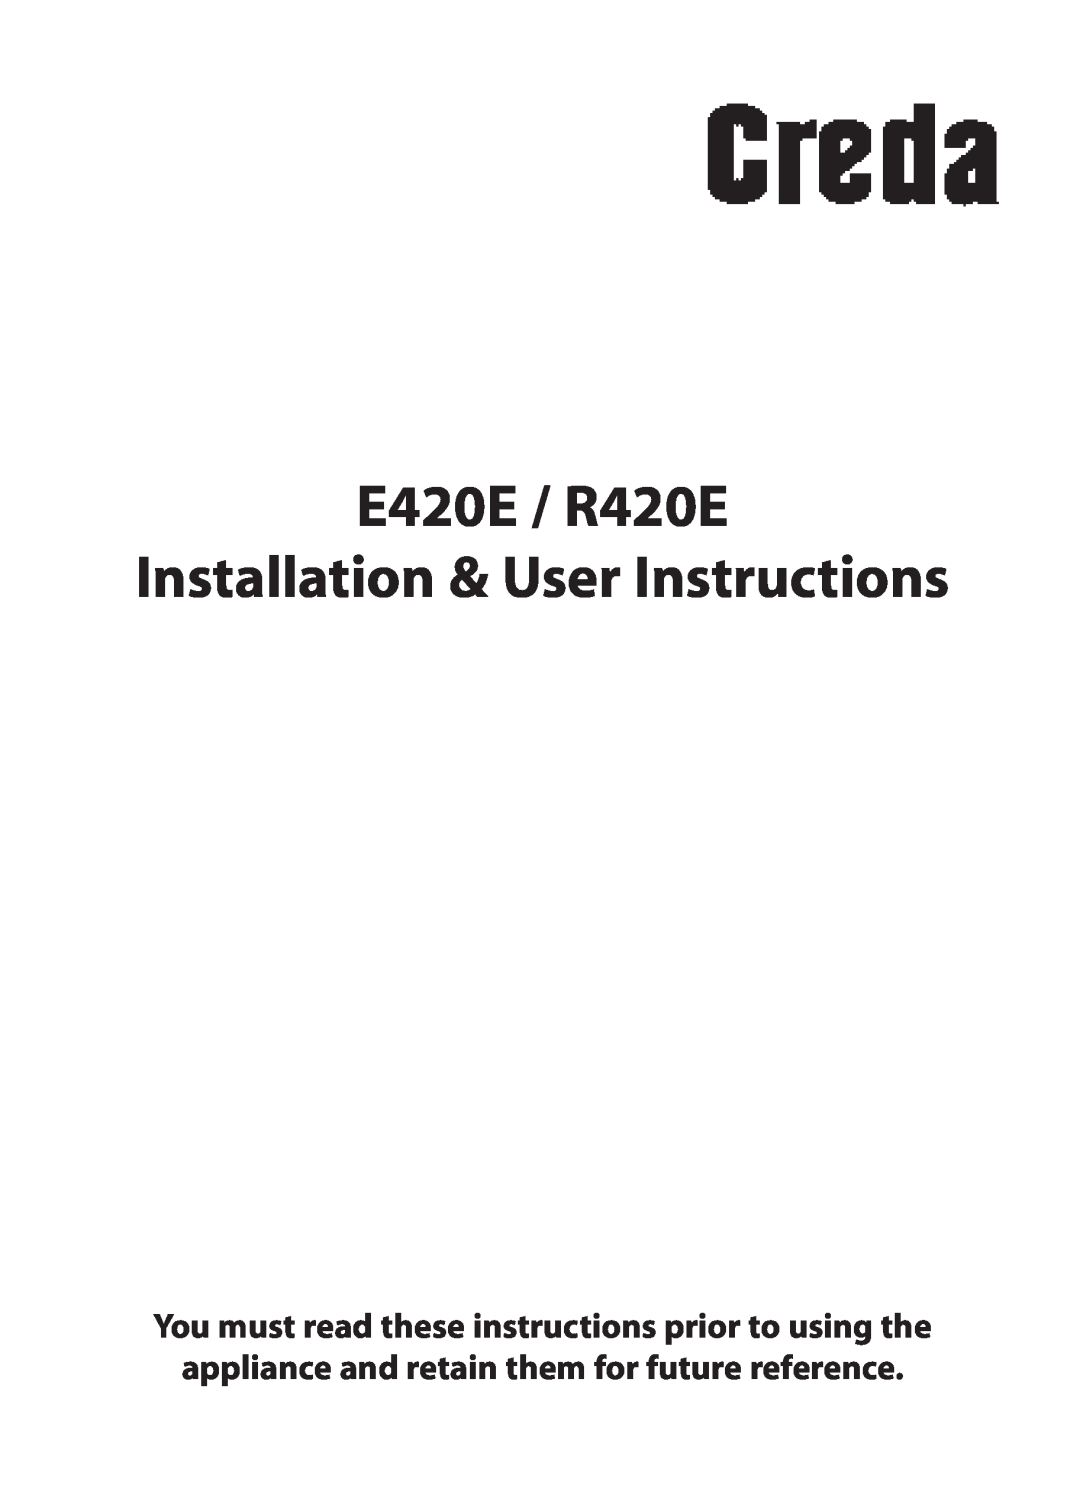 Creda manual E420E / R420E Installation & User Instructions 